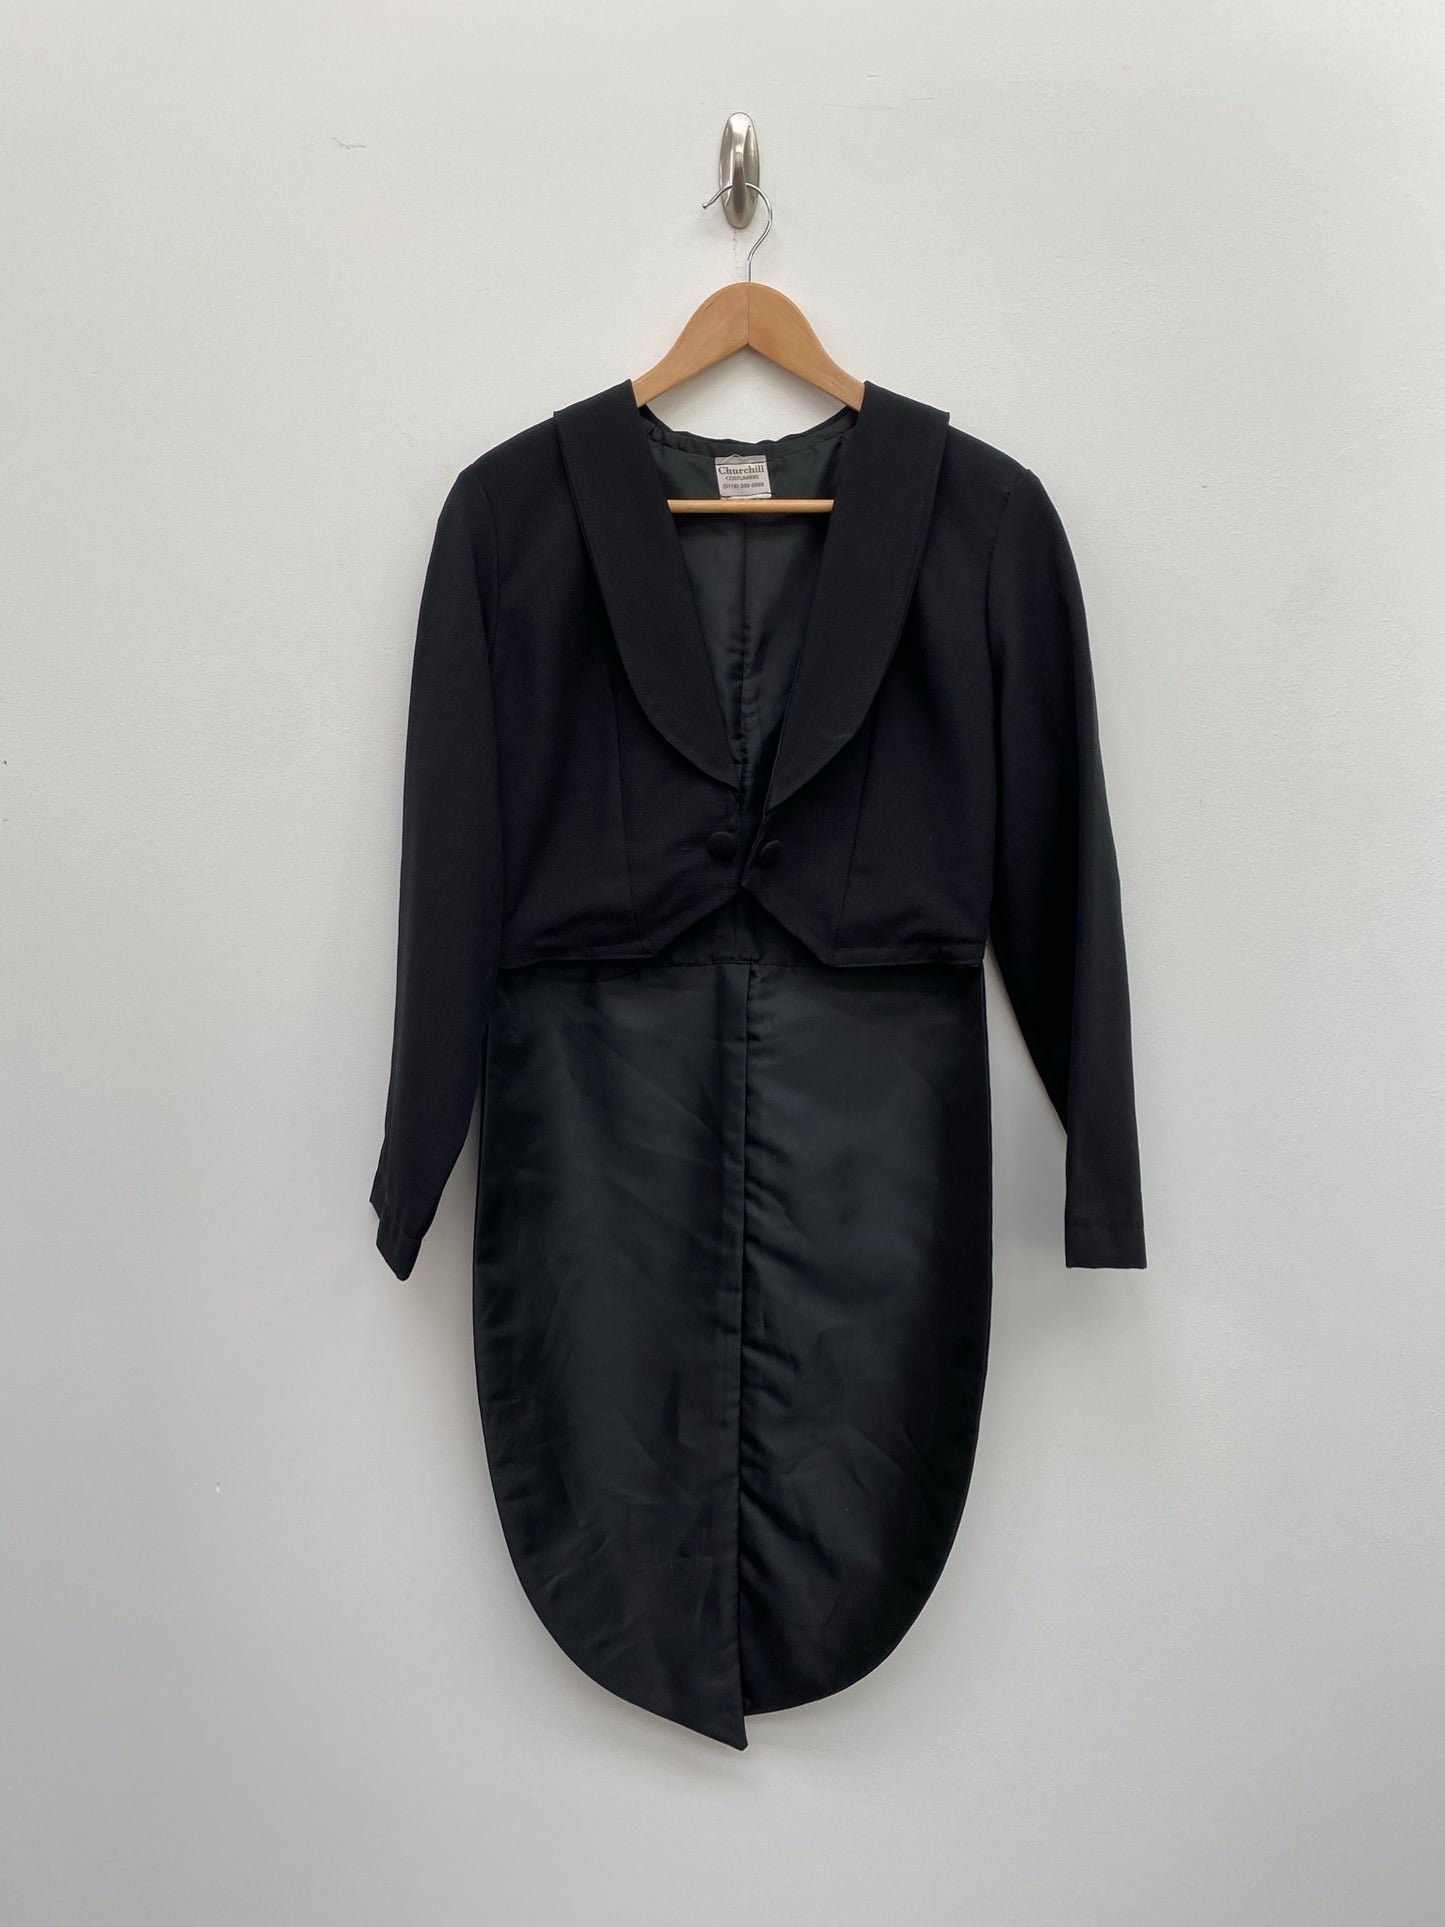 Ringmaster Black Tailcoat Medium - Ex Hire Fancy Dress Costume